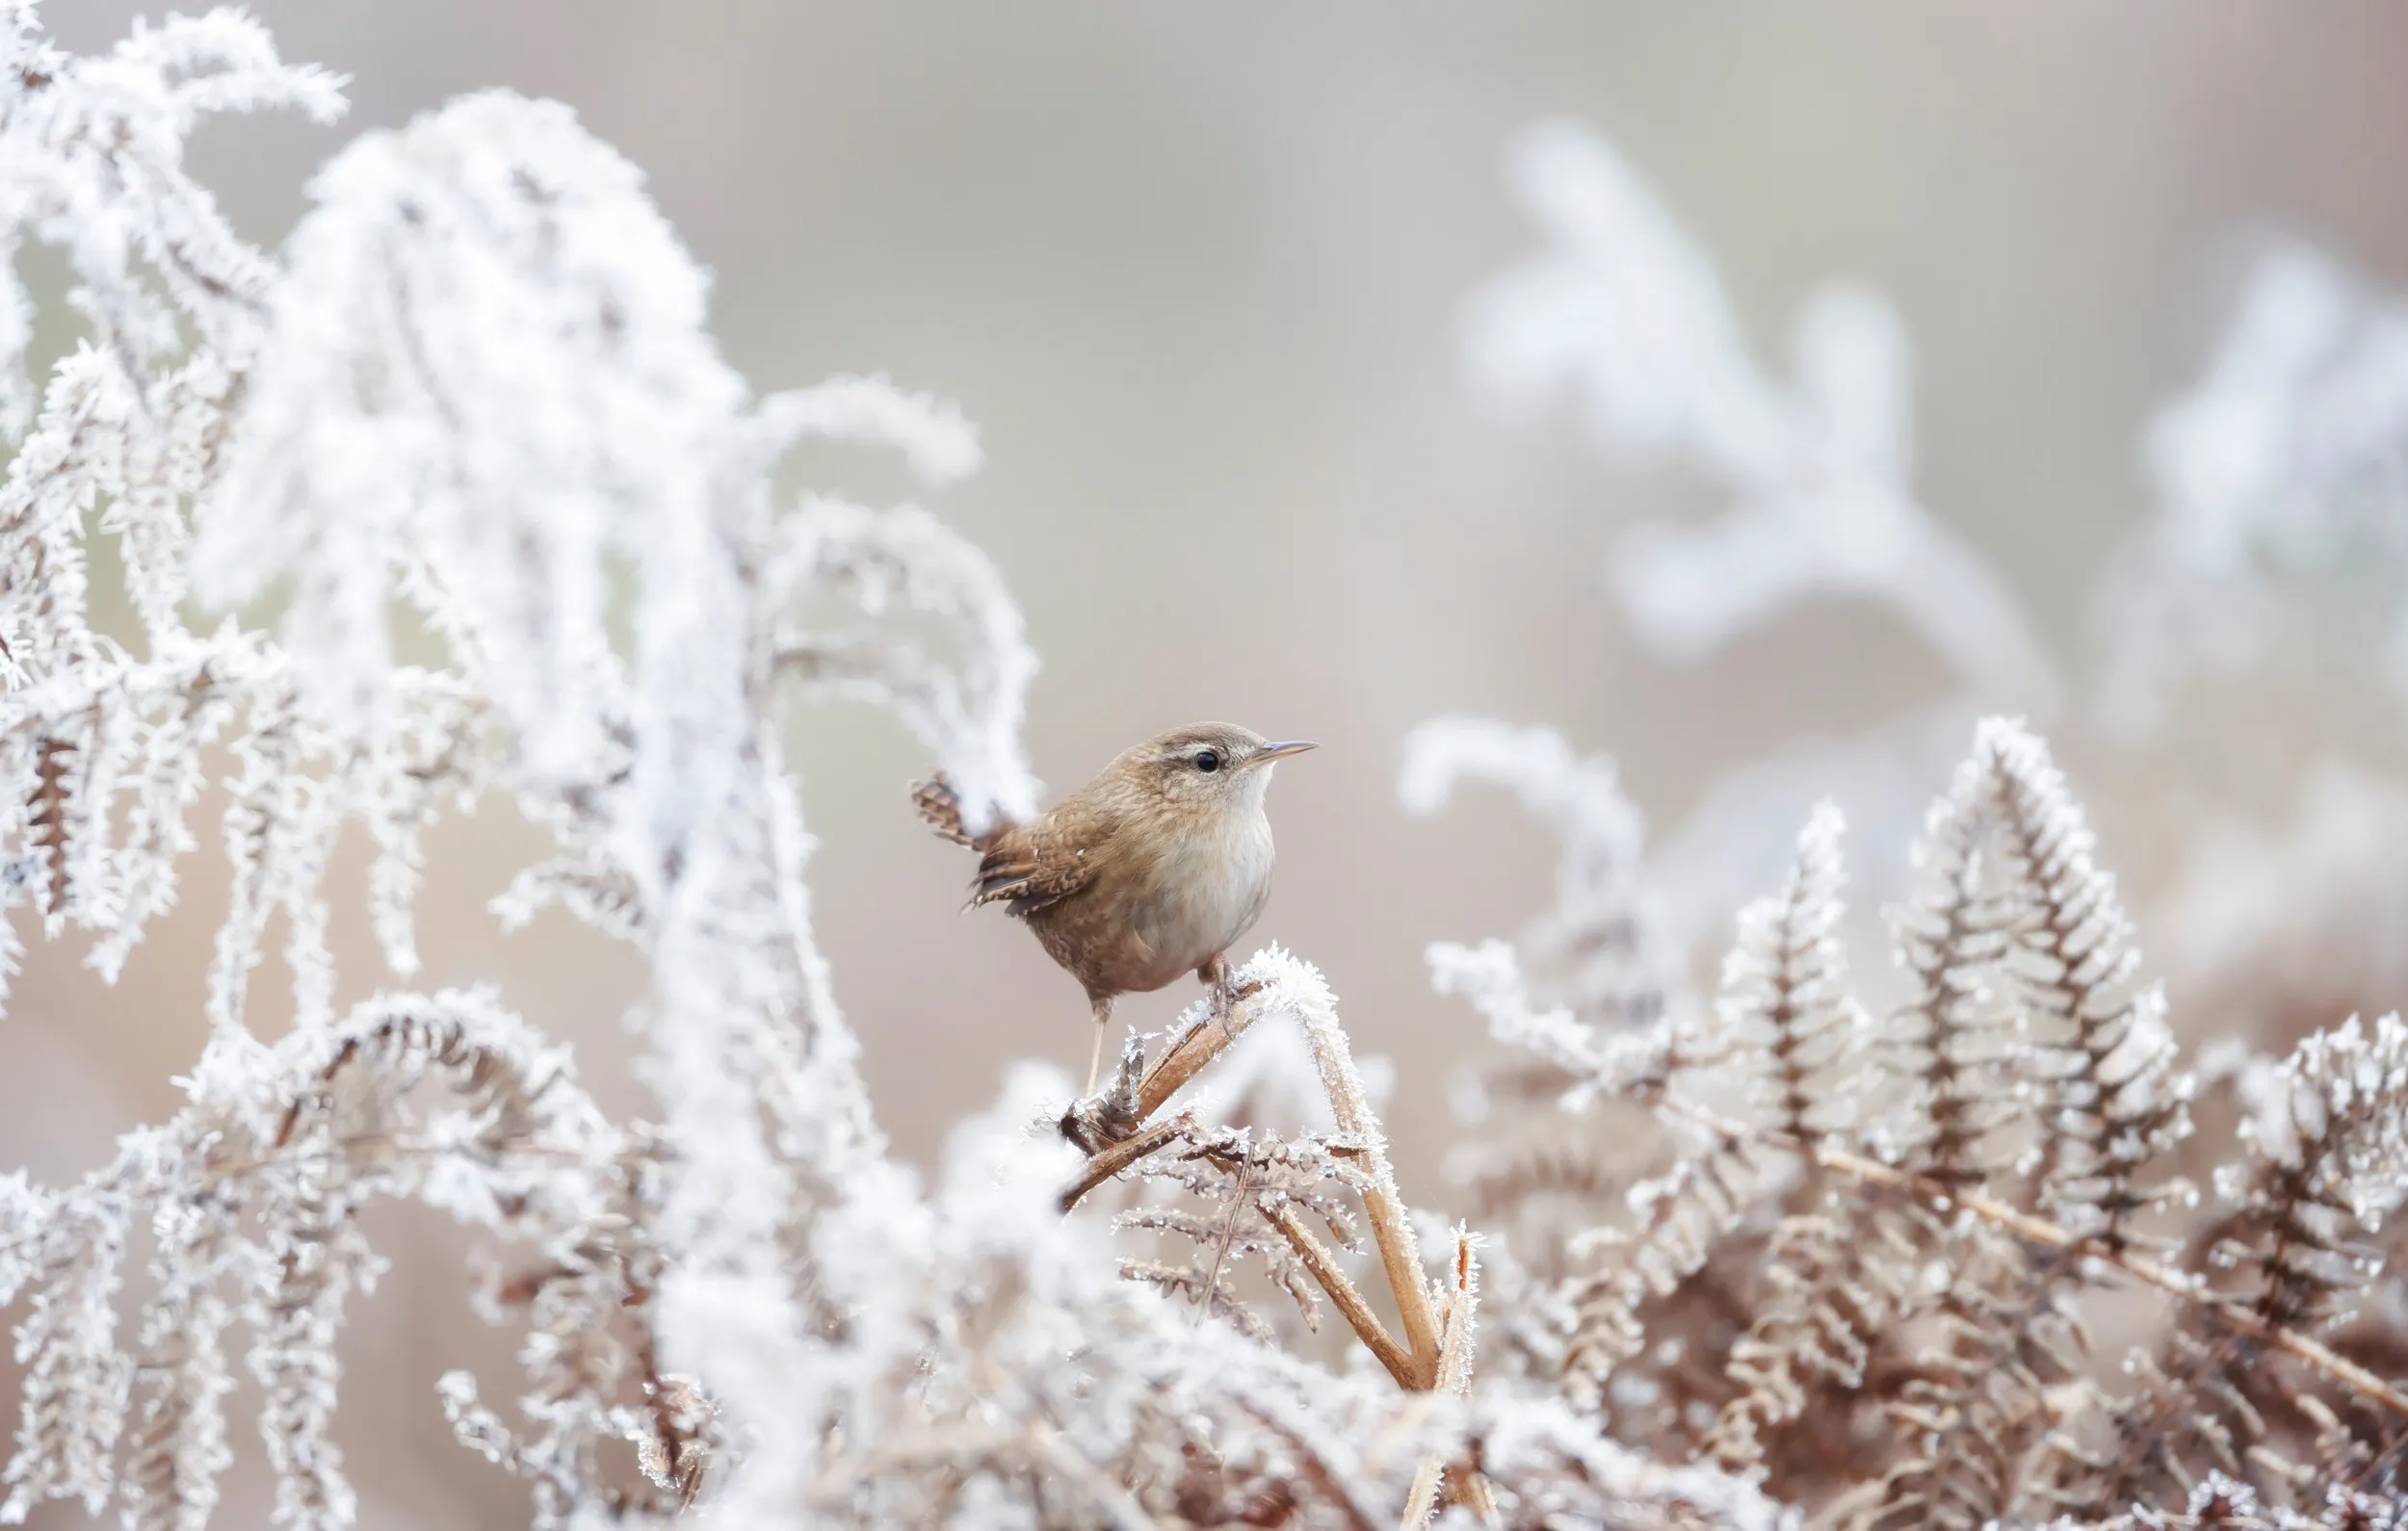 A lone little Wren perched between frosty vegetation.